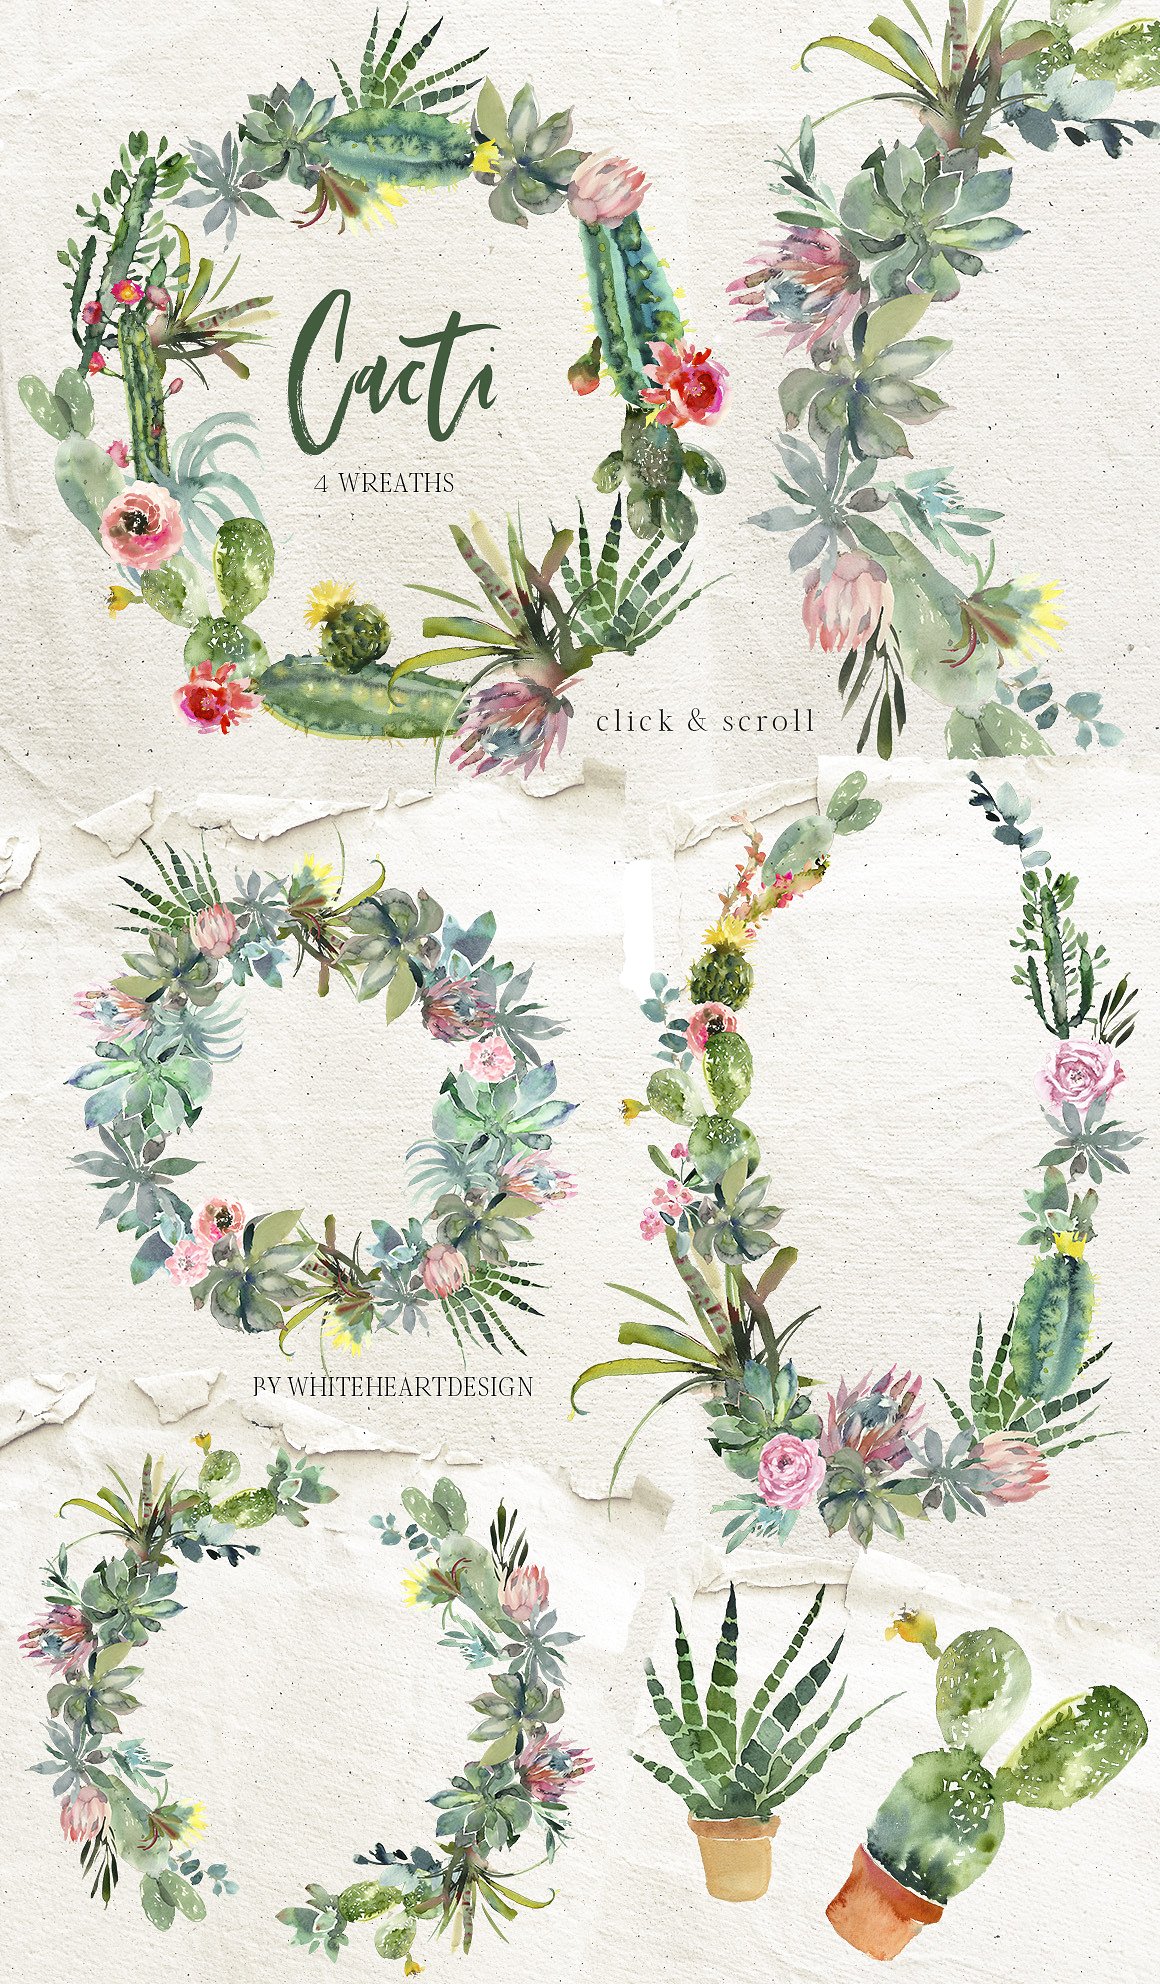 漂亮的手绘仙人掌多肉花卉PNG剪贴画集 Beautiful Hand-Painted Cactus Succulent Flower PNG Clip Art Set插图2